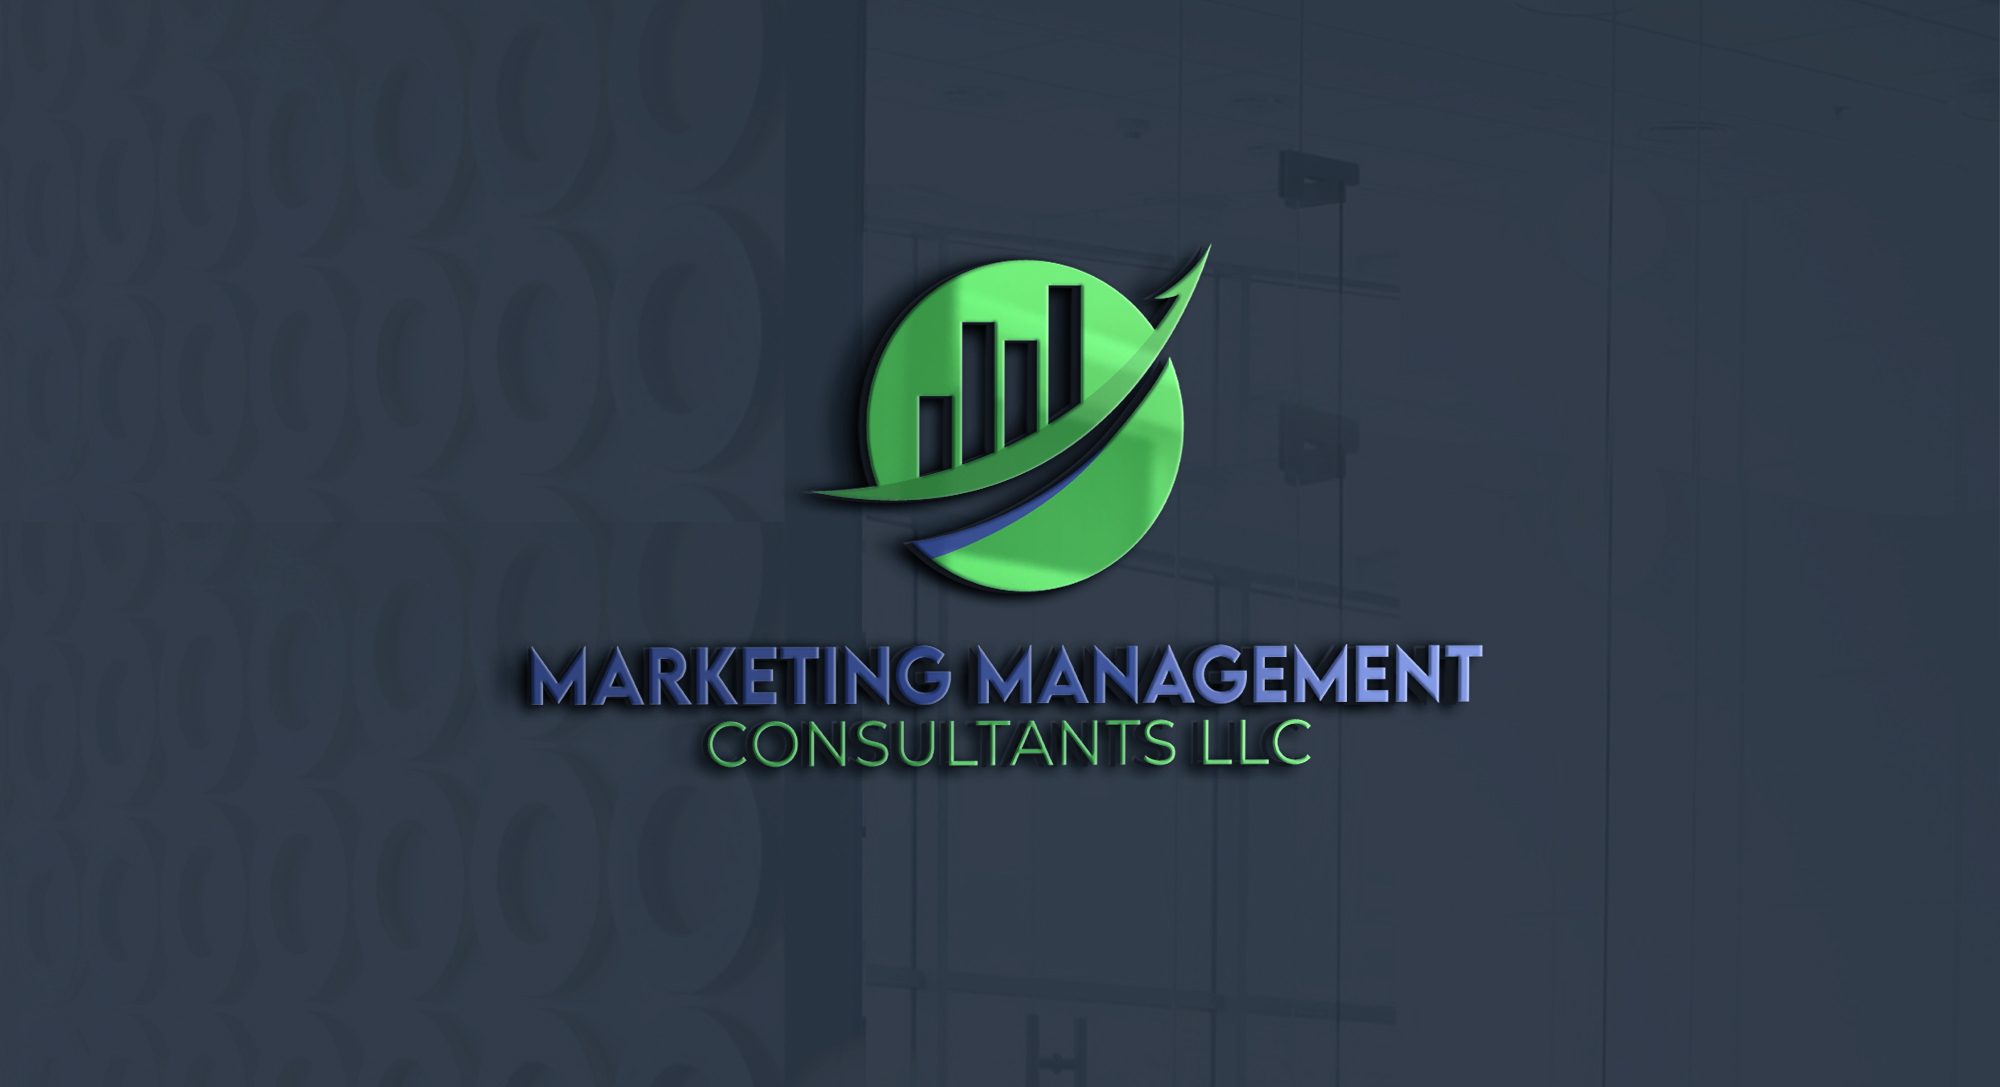 Marketing management consultants llc's Logo